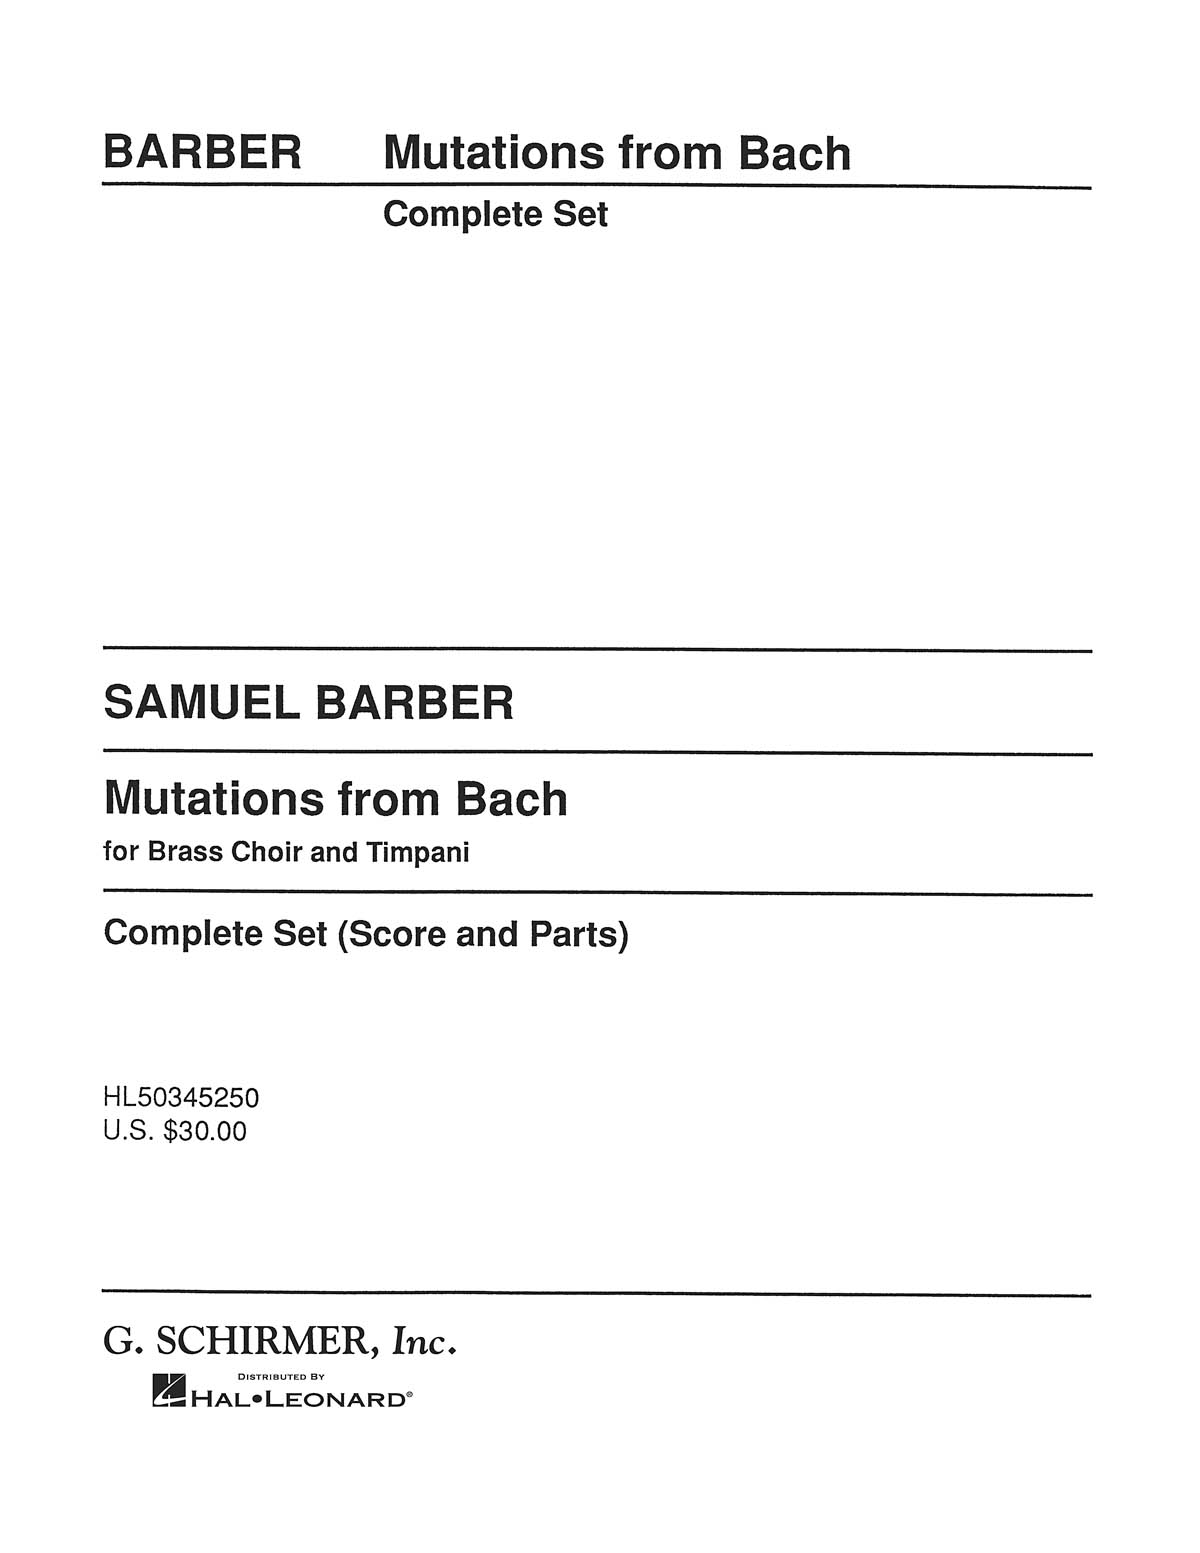 Samuel Barber: Mutations from Bach